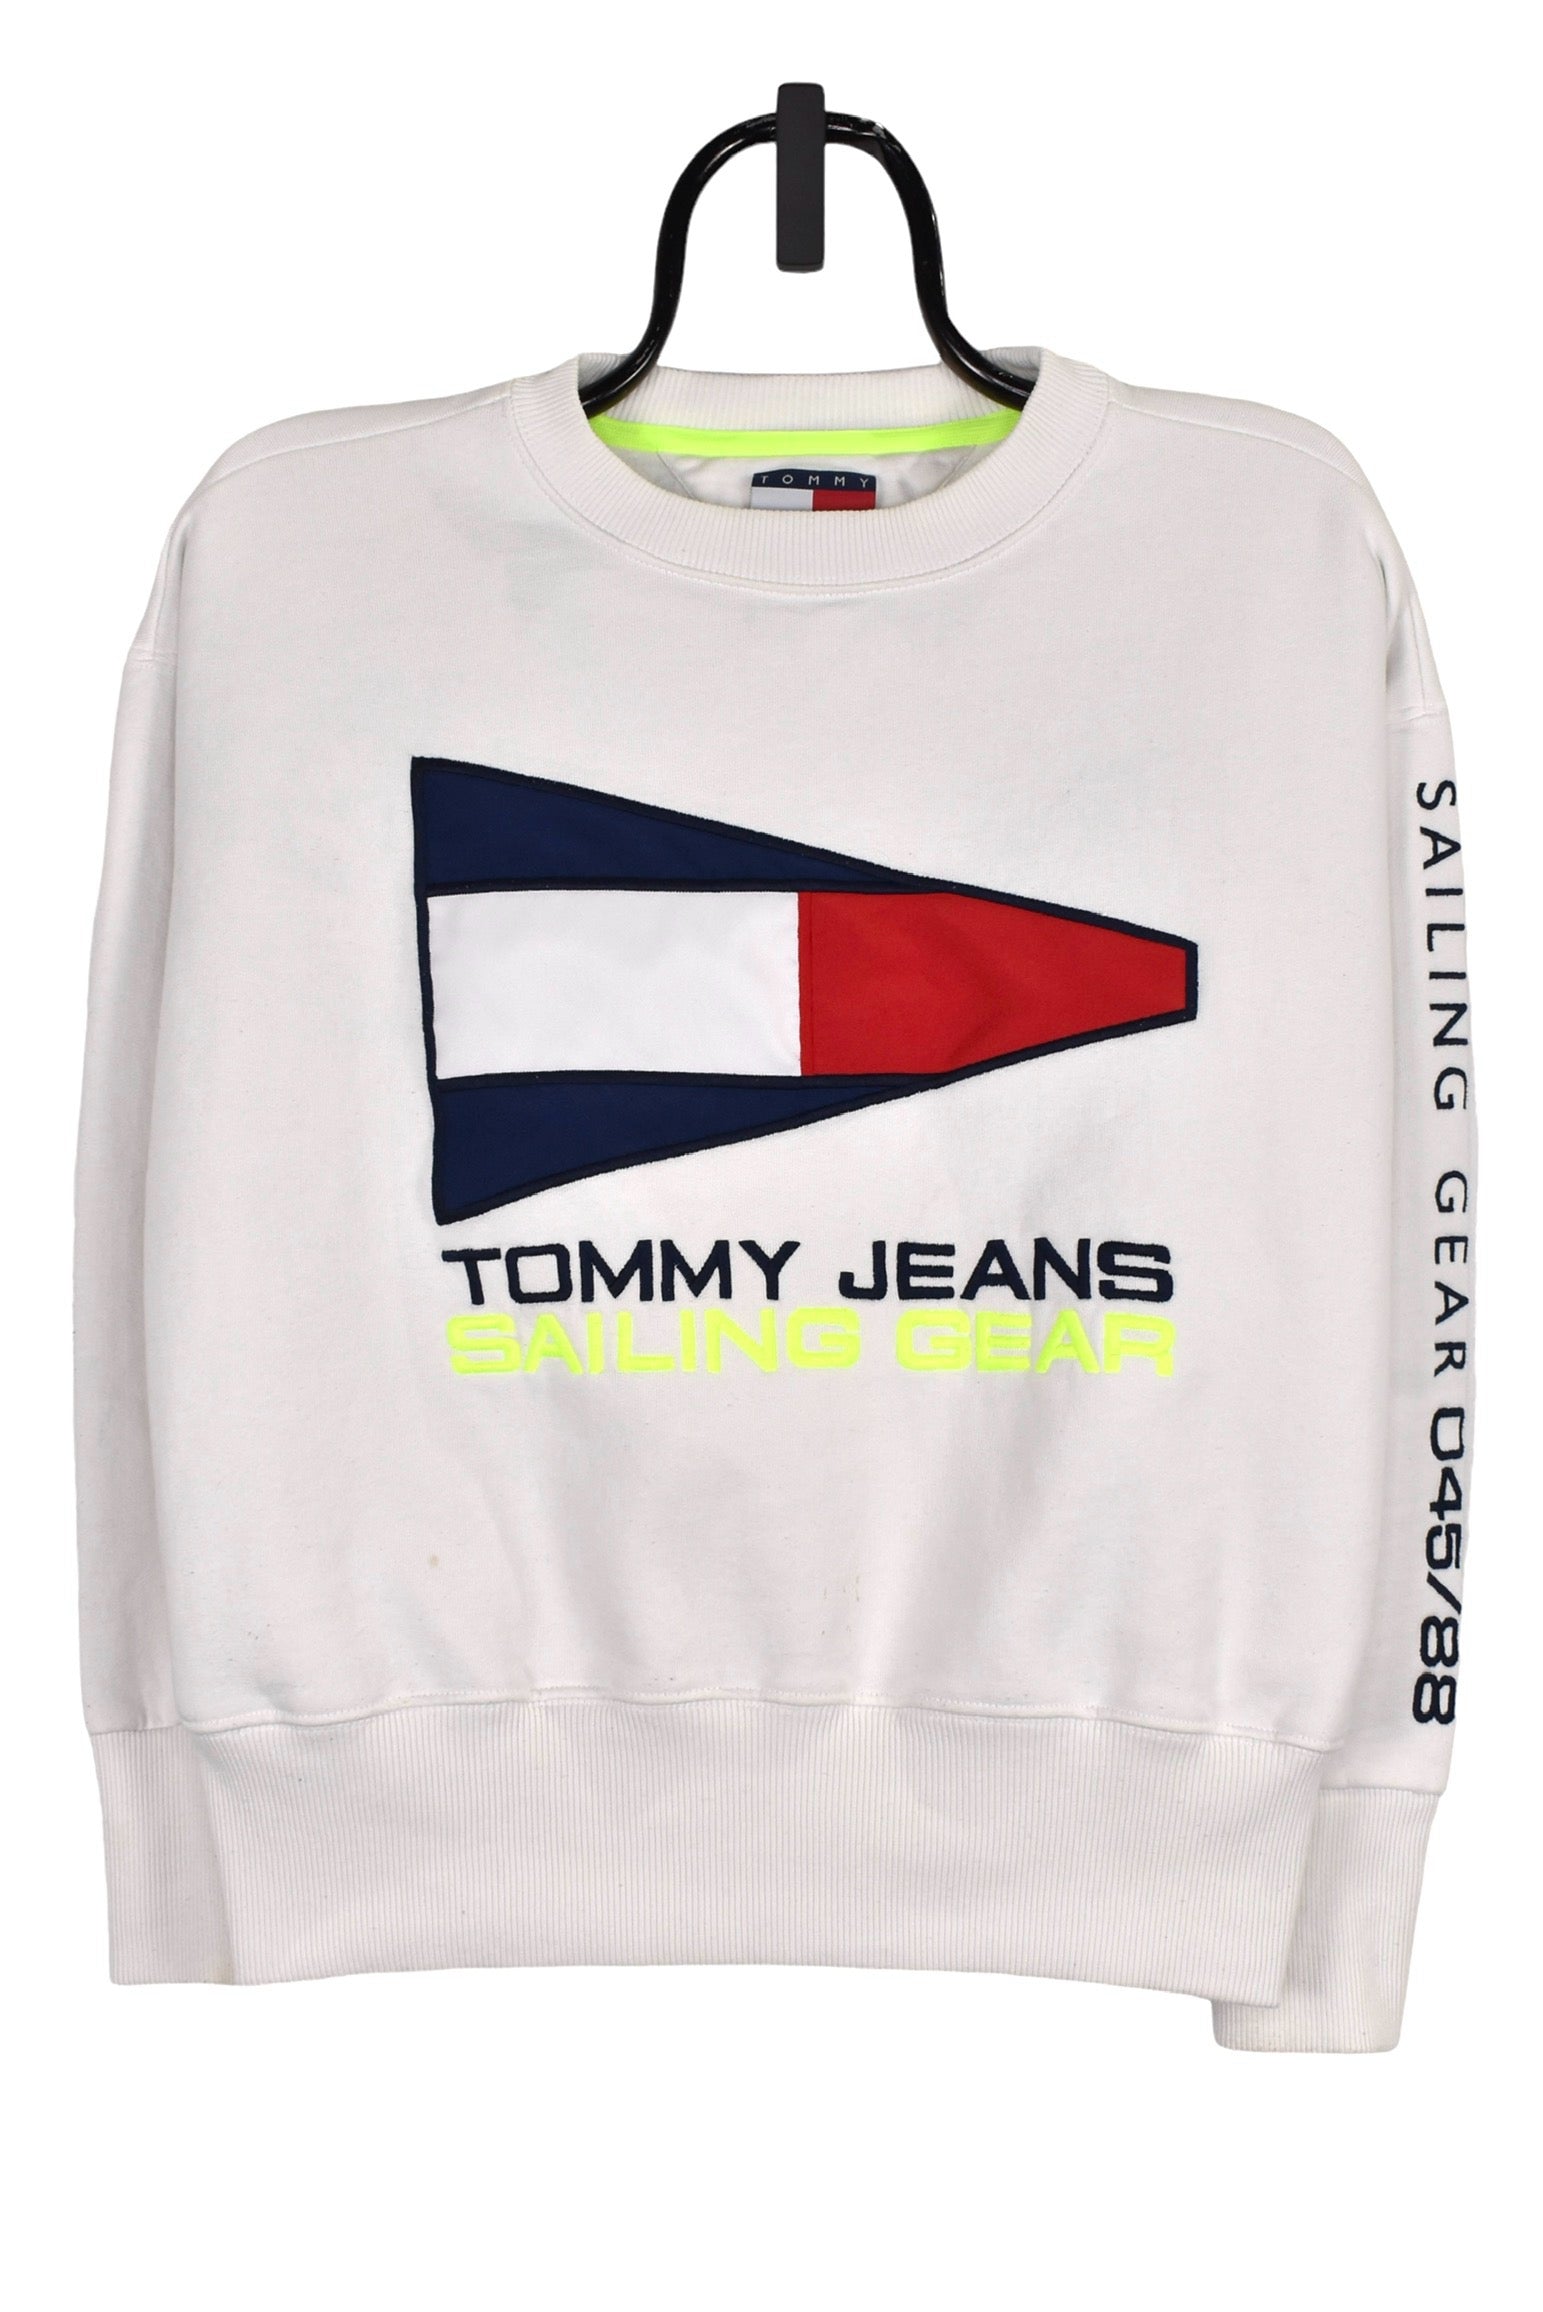 Vintage Tommy Hilfiger sweatshirt (S), white embroidered crewneck